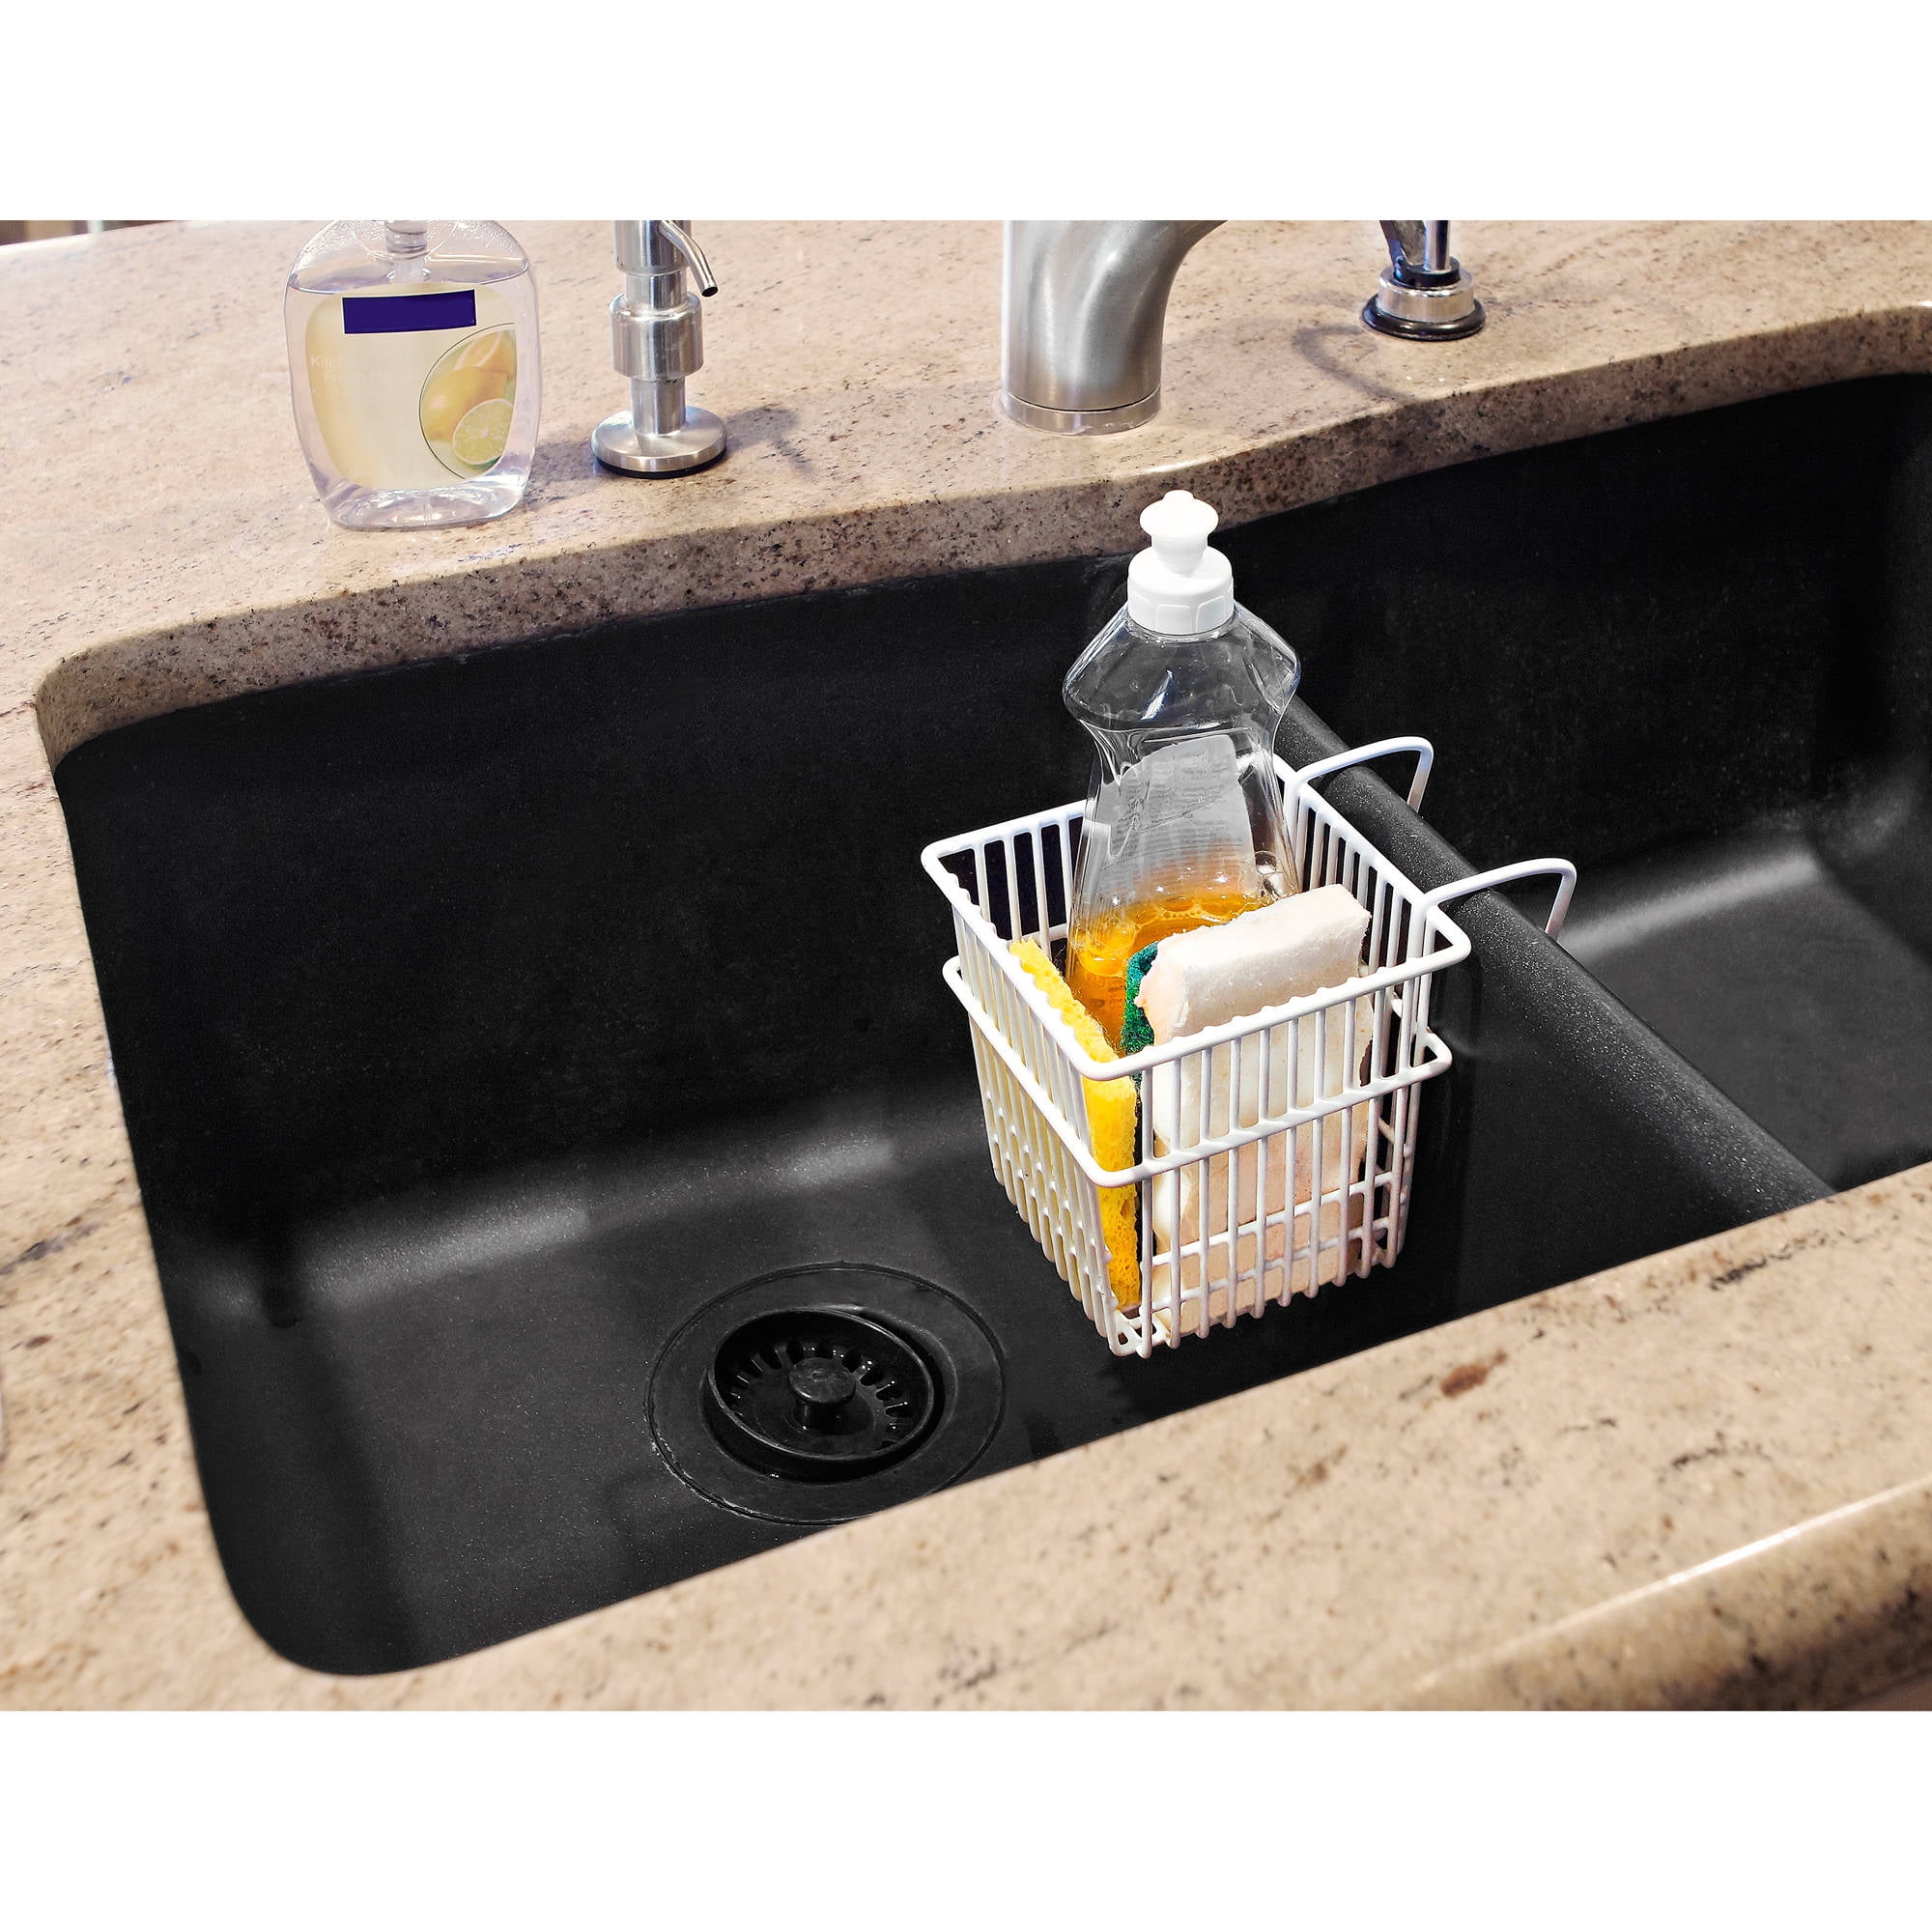 2/PK Self-Adhesive Sink Adjustable Dishwand(Dish Wand)Holder